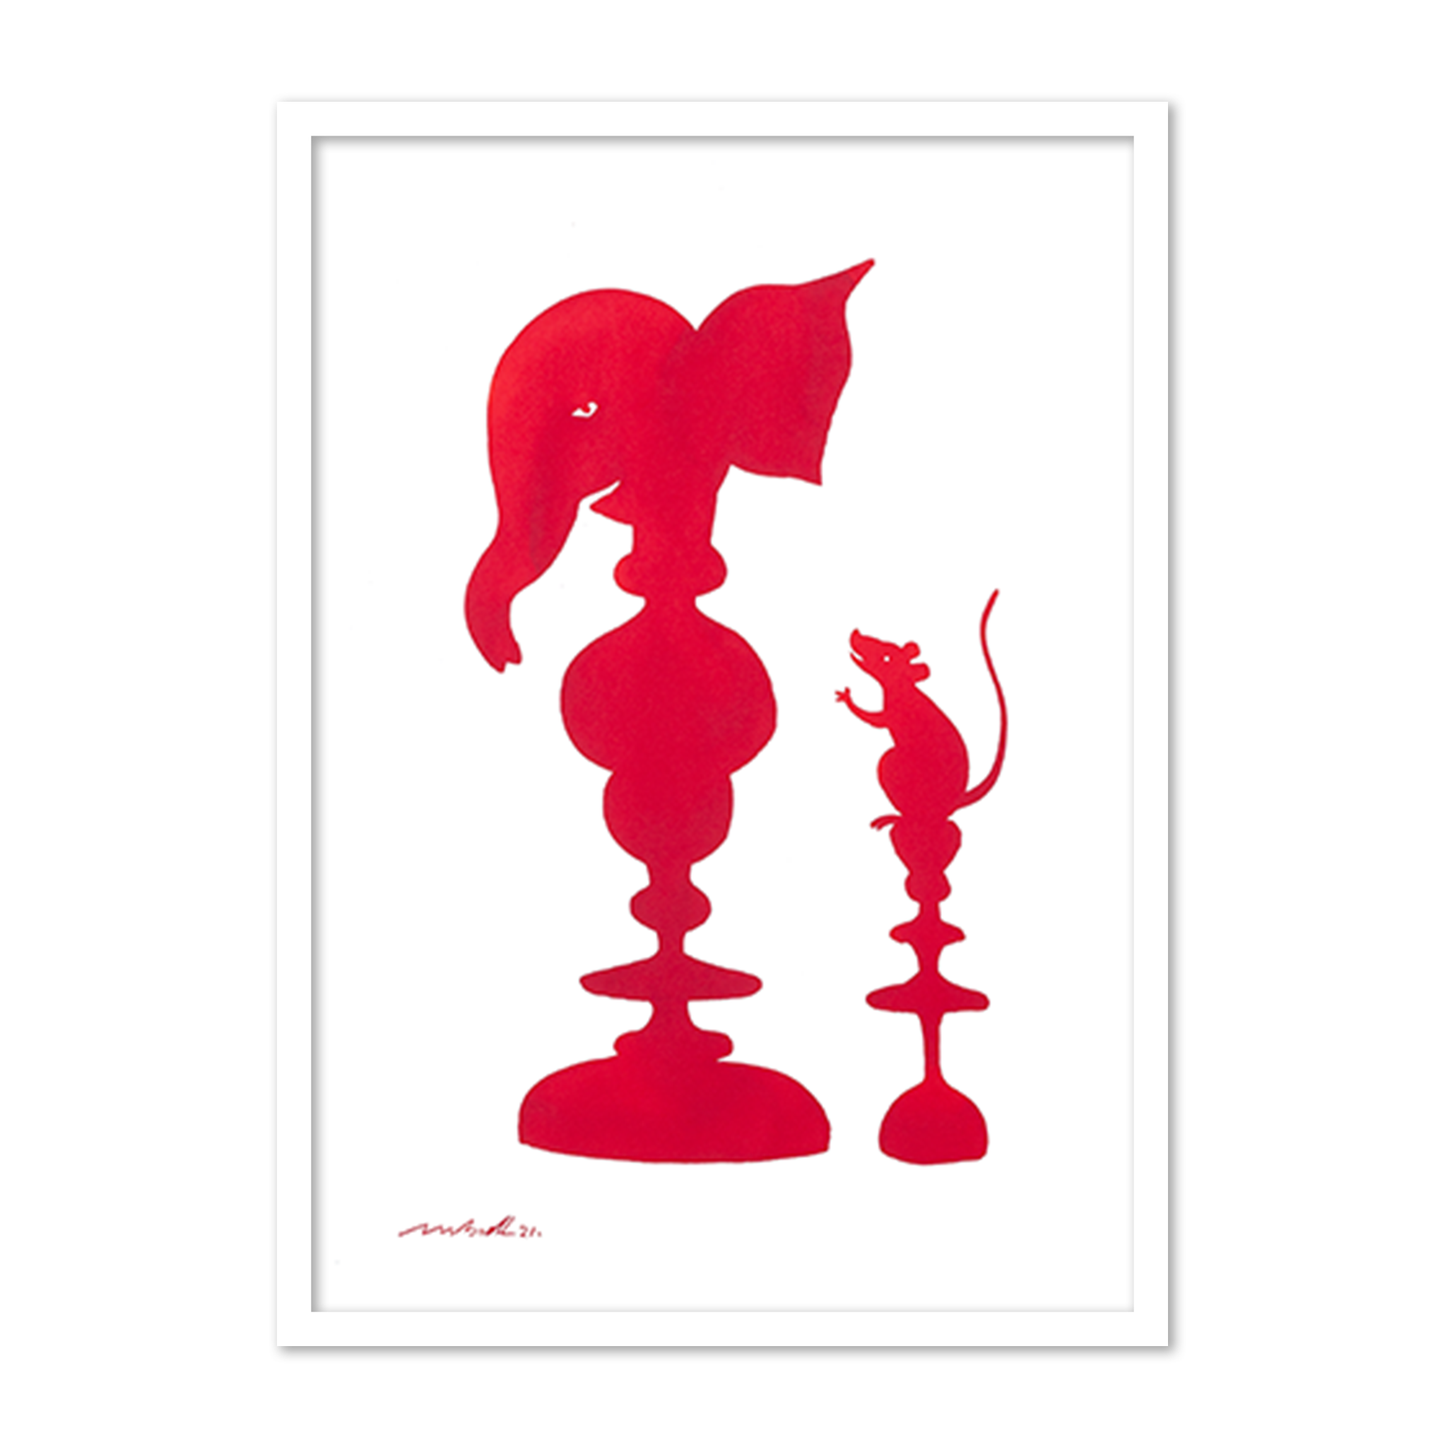 Ganesha - The Chess King